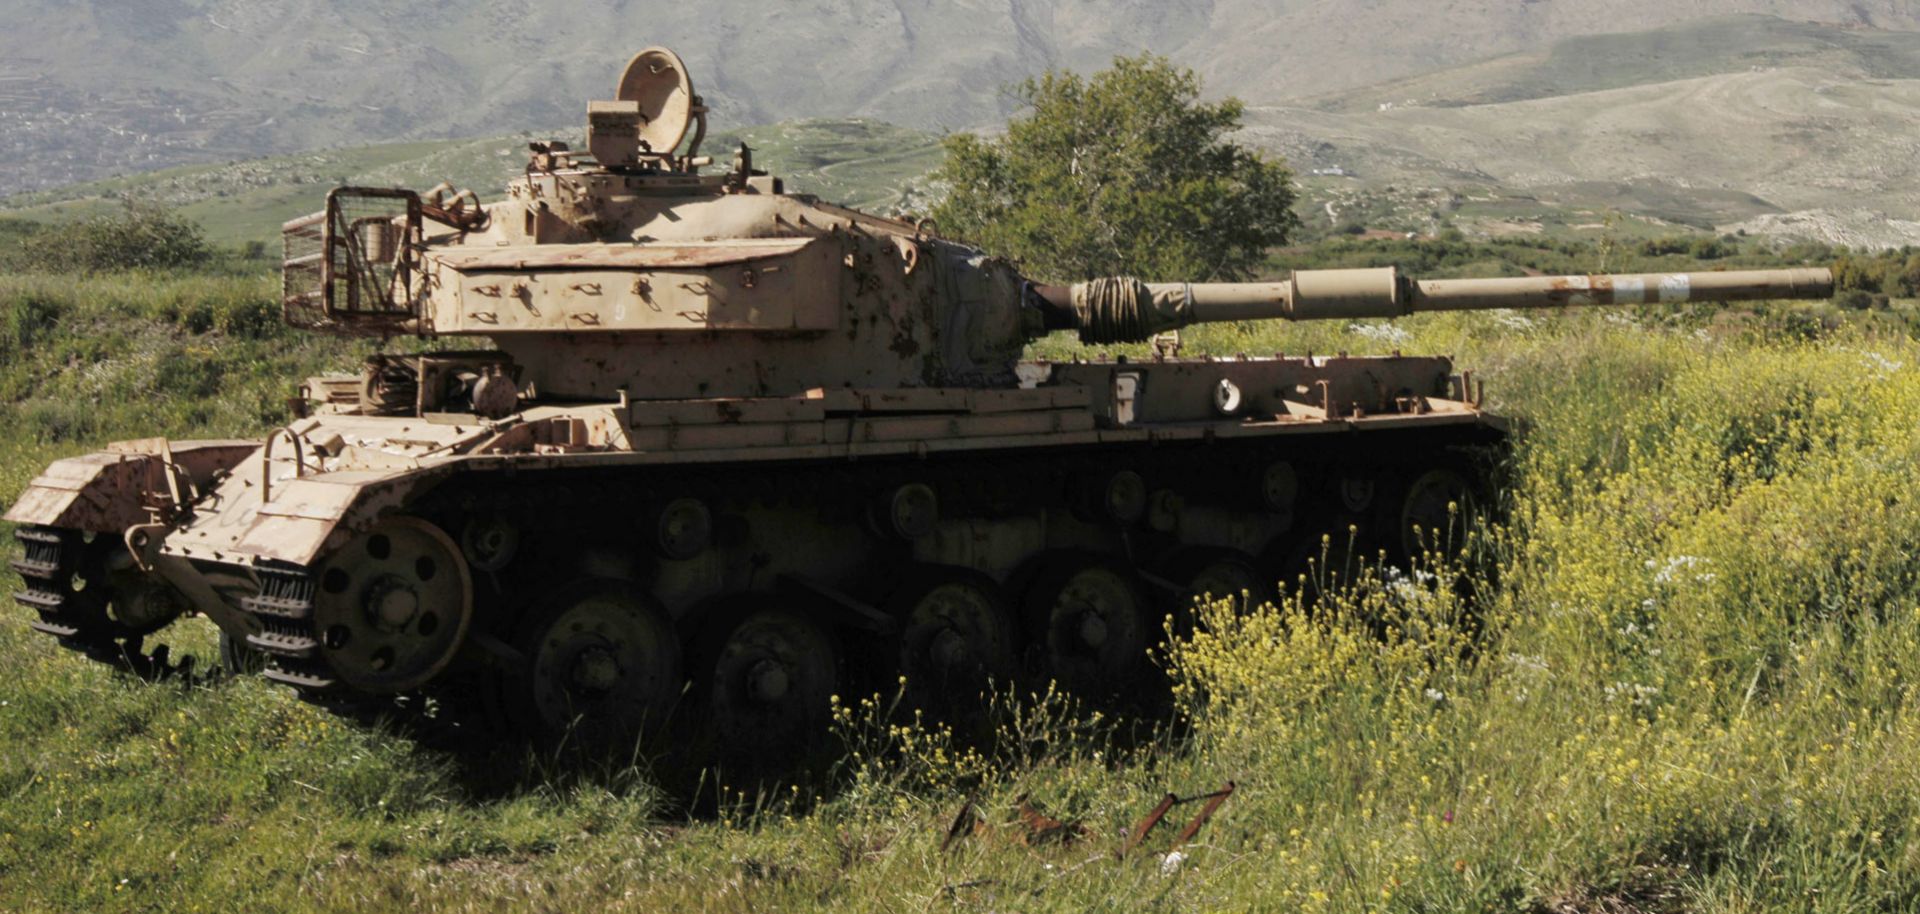 Israeli tanks in the Golan Heights